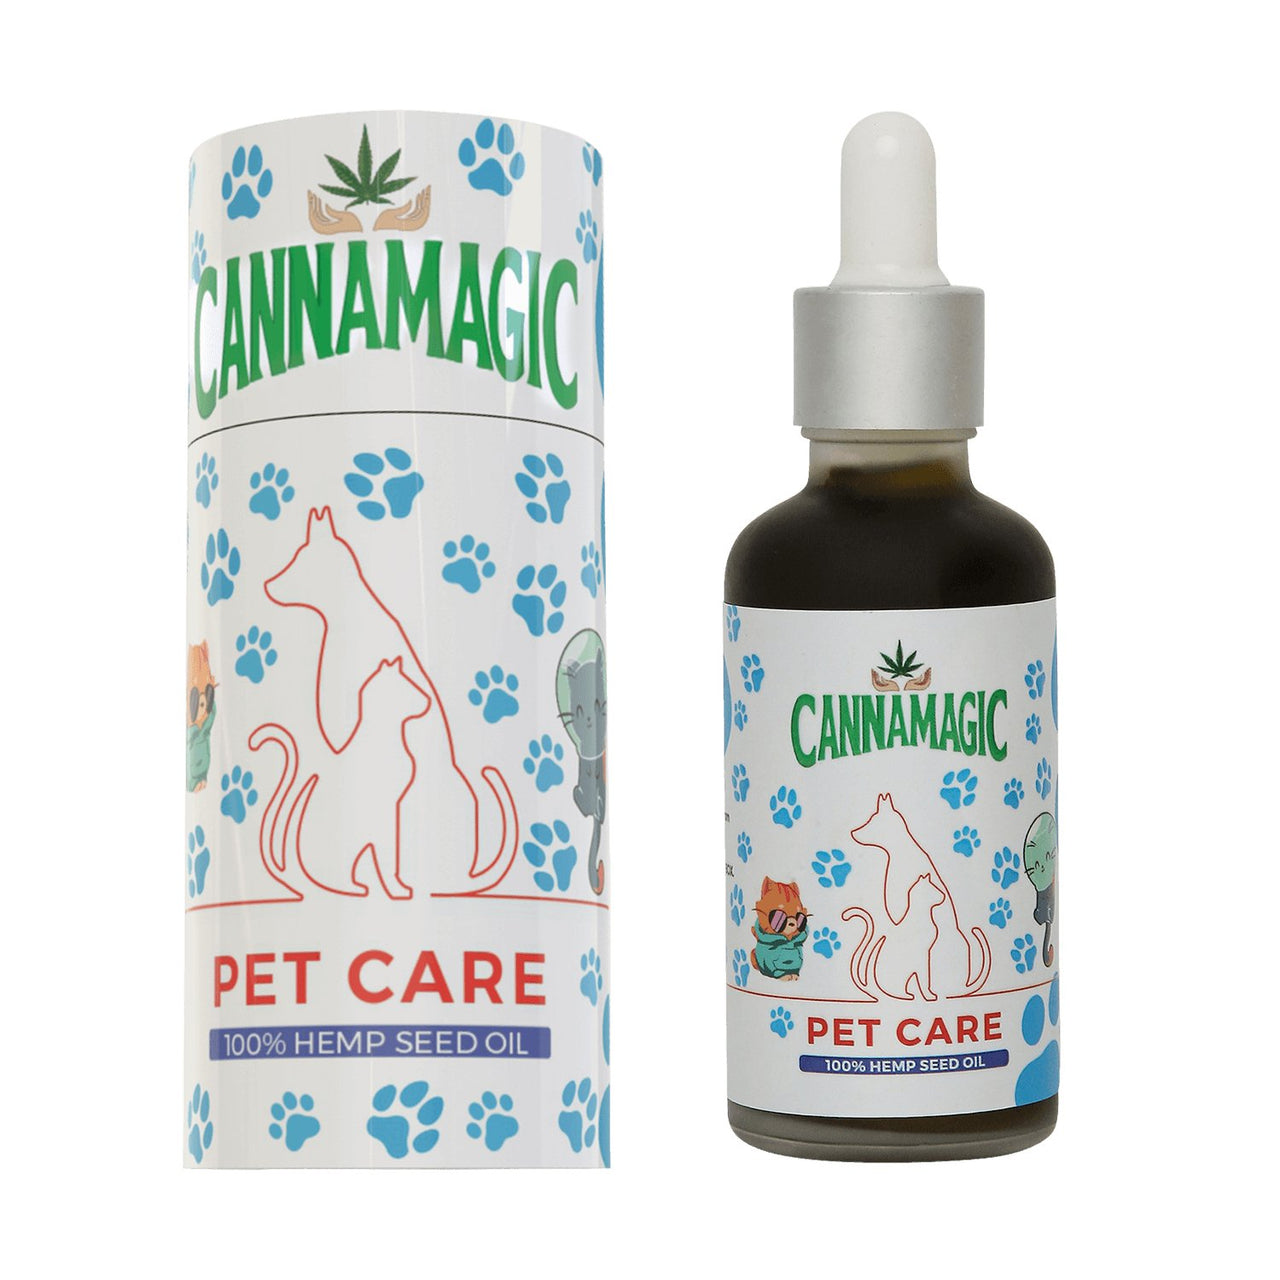 Cannamagic Pet Care - 100% Hemp Seed Oil - CBD Store India